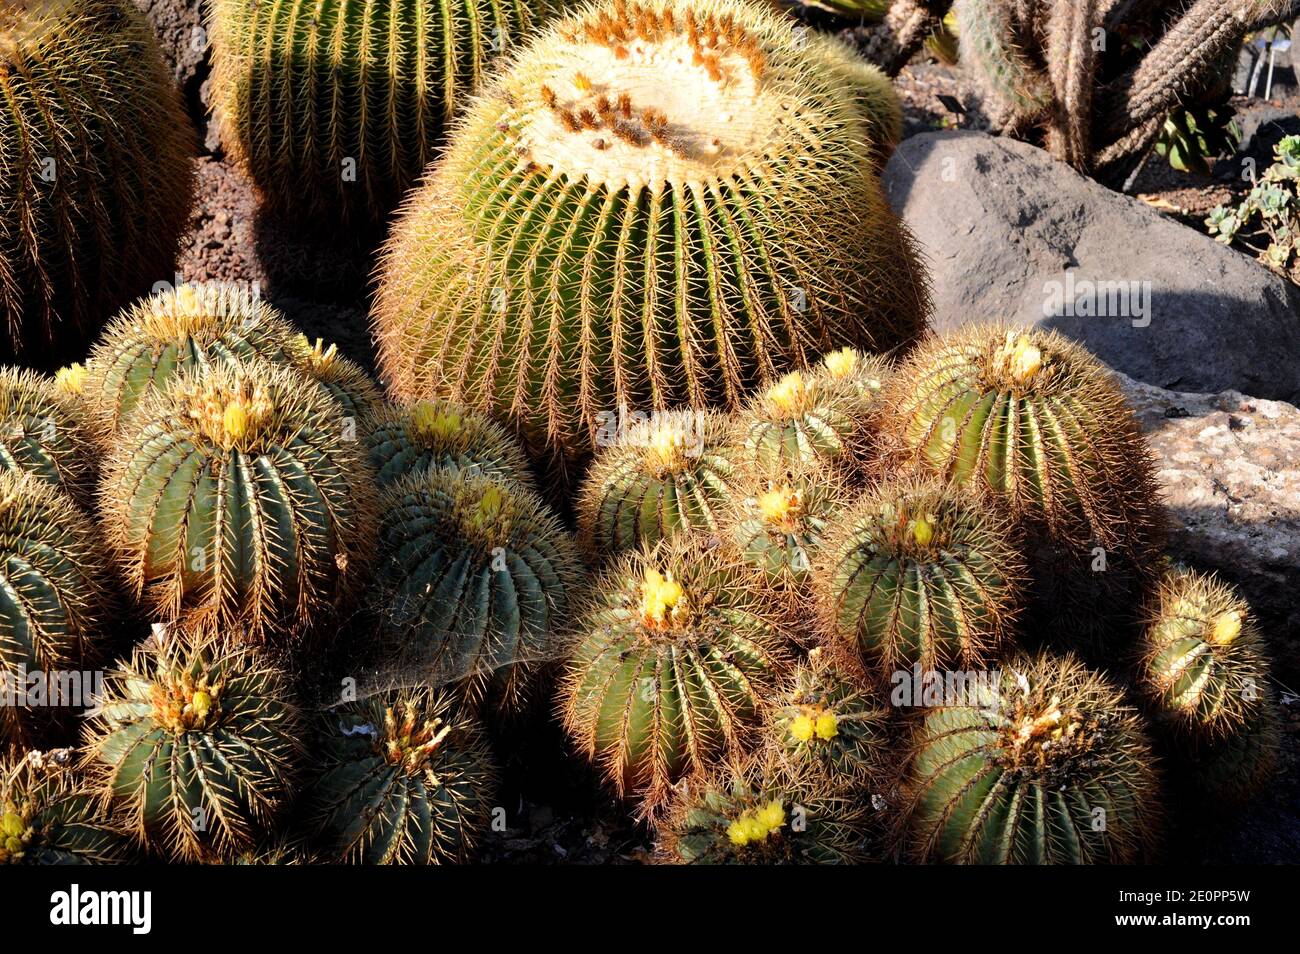 Barrel cactus (Ferocactus glaucescens) is a spherical cactus endemic to Hidalgo, Mexico. Stock Photo